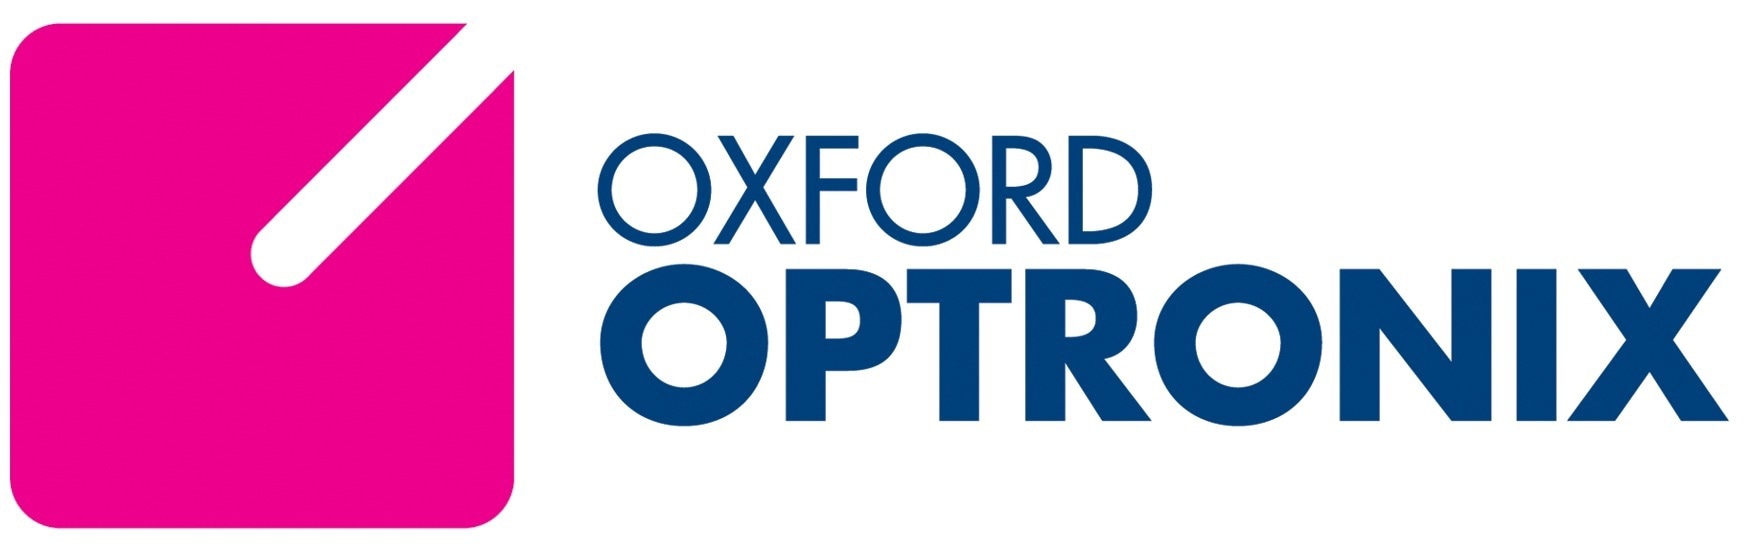 Oxford Optronix Ltd.